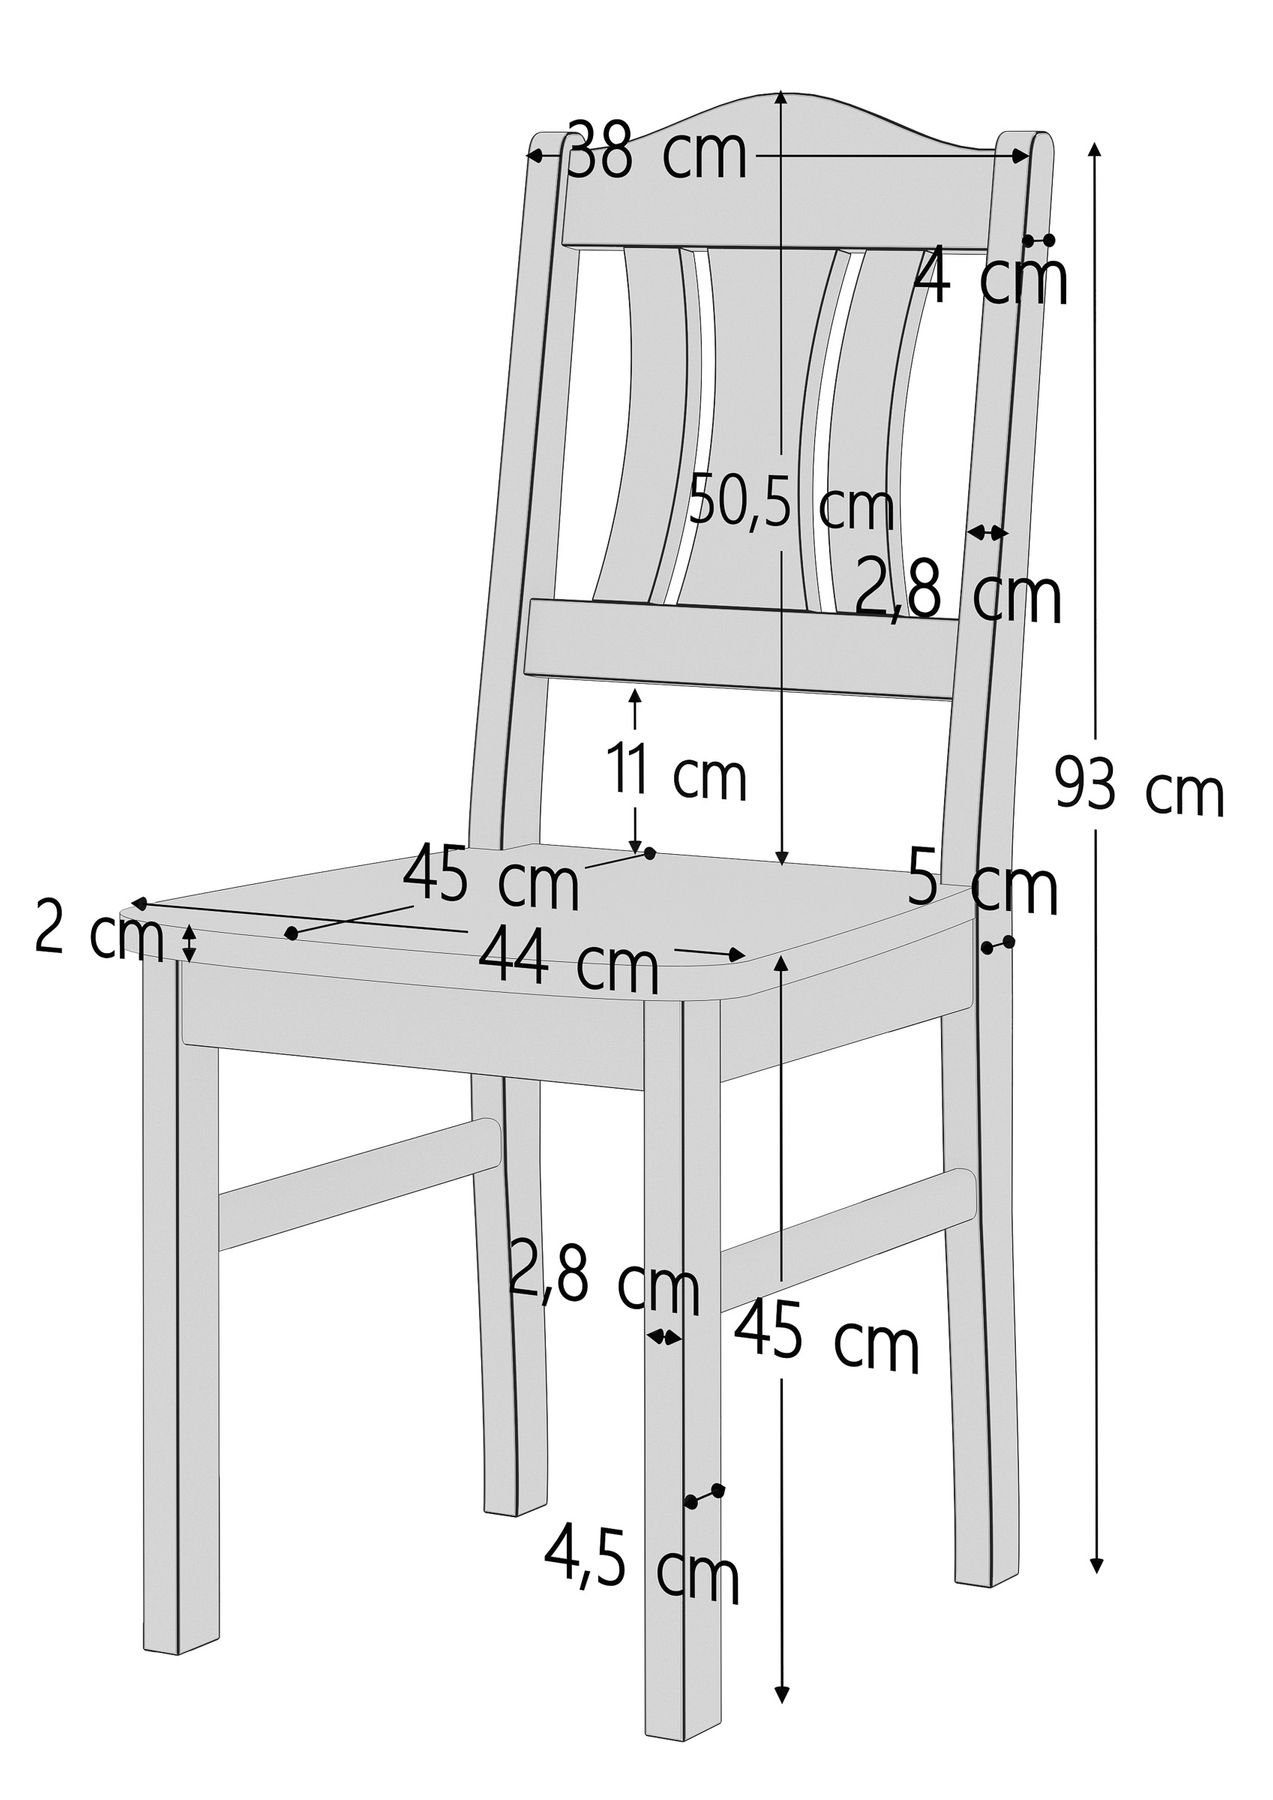 Küchenstuhl oder Doppelpack Massivholzstuhl robust Kiefer Esszimmerstuhl Einzelstuhl ERST-HOLZ